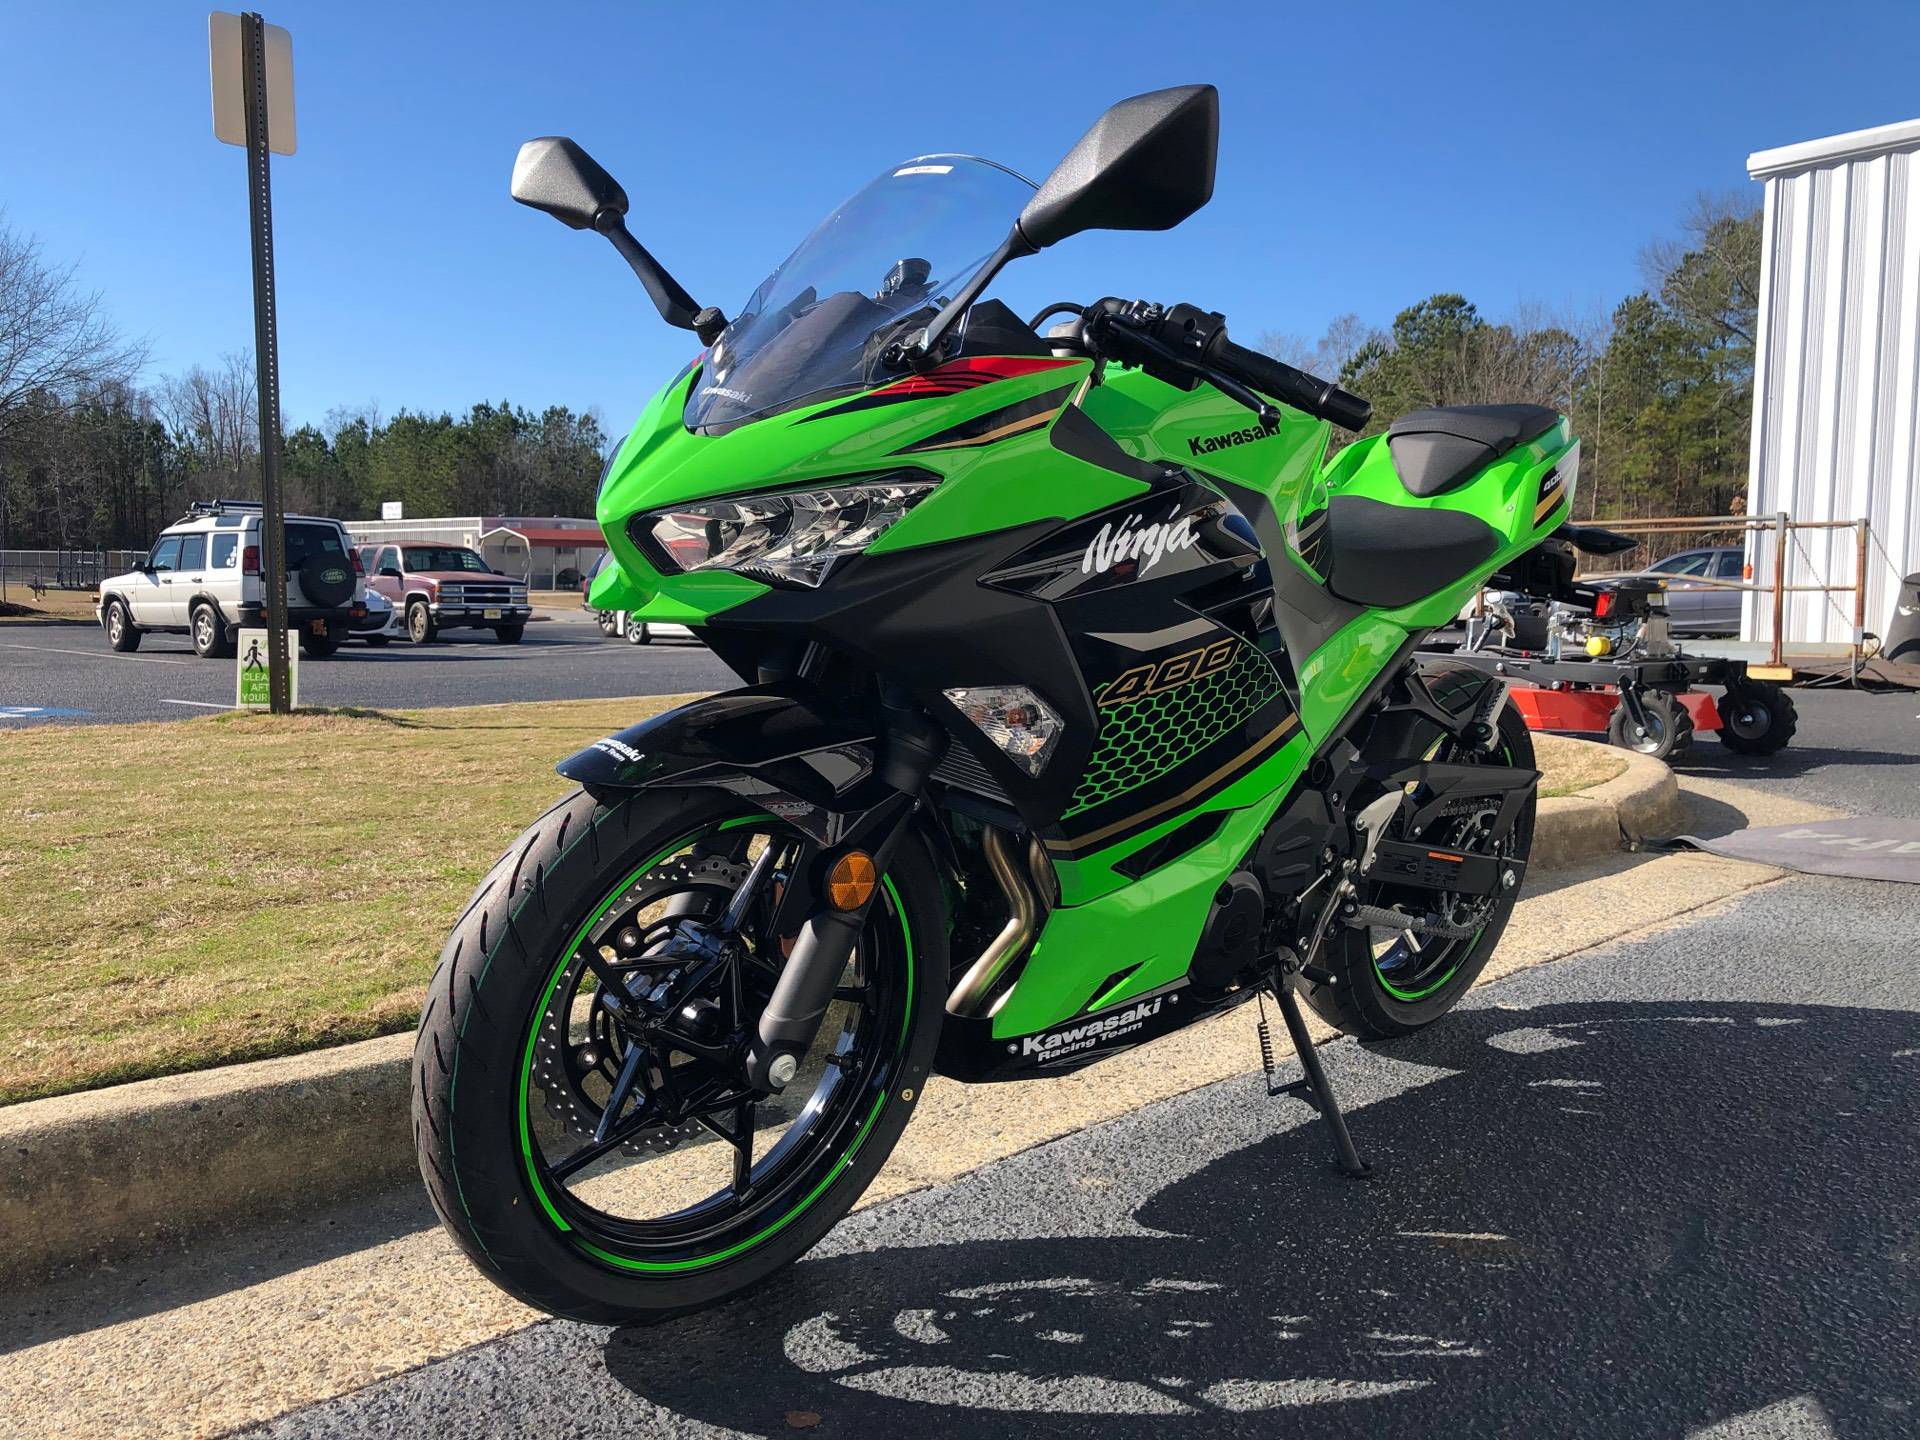 New 2020 Kawasaki Ninja 400 KRT Edition Motorcycles in Greenville, NC